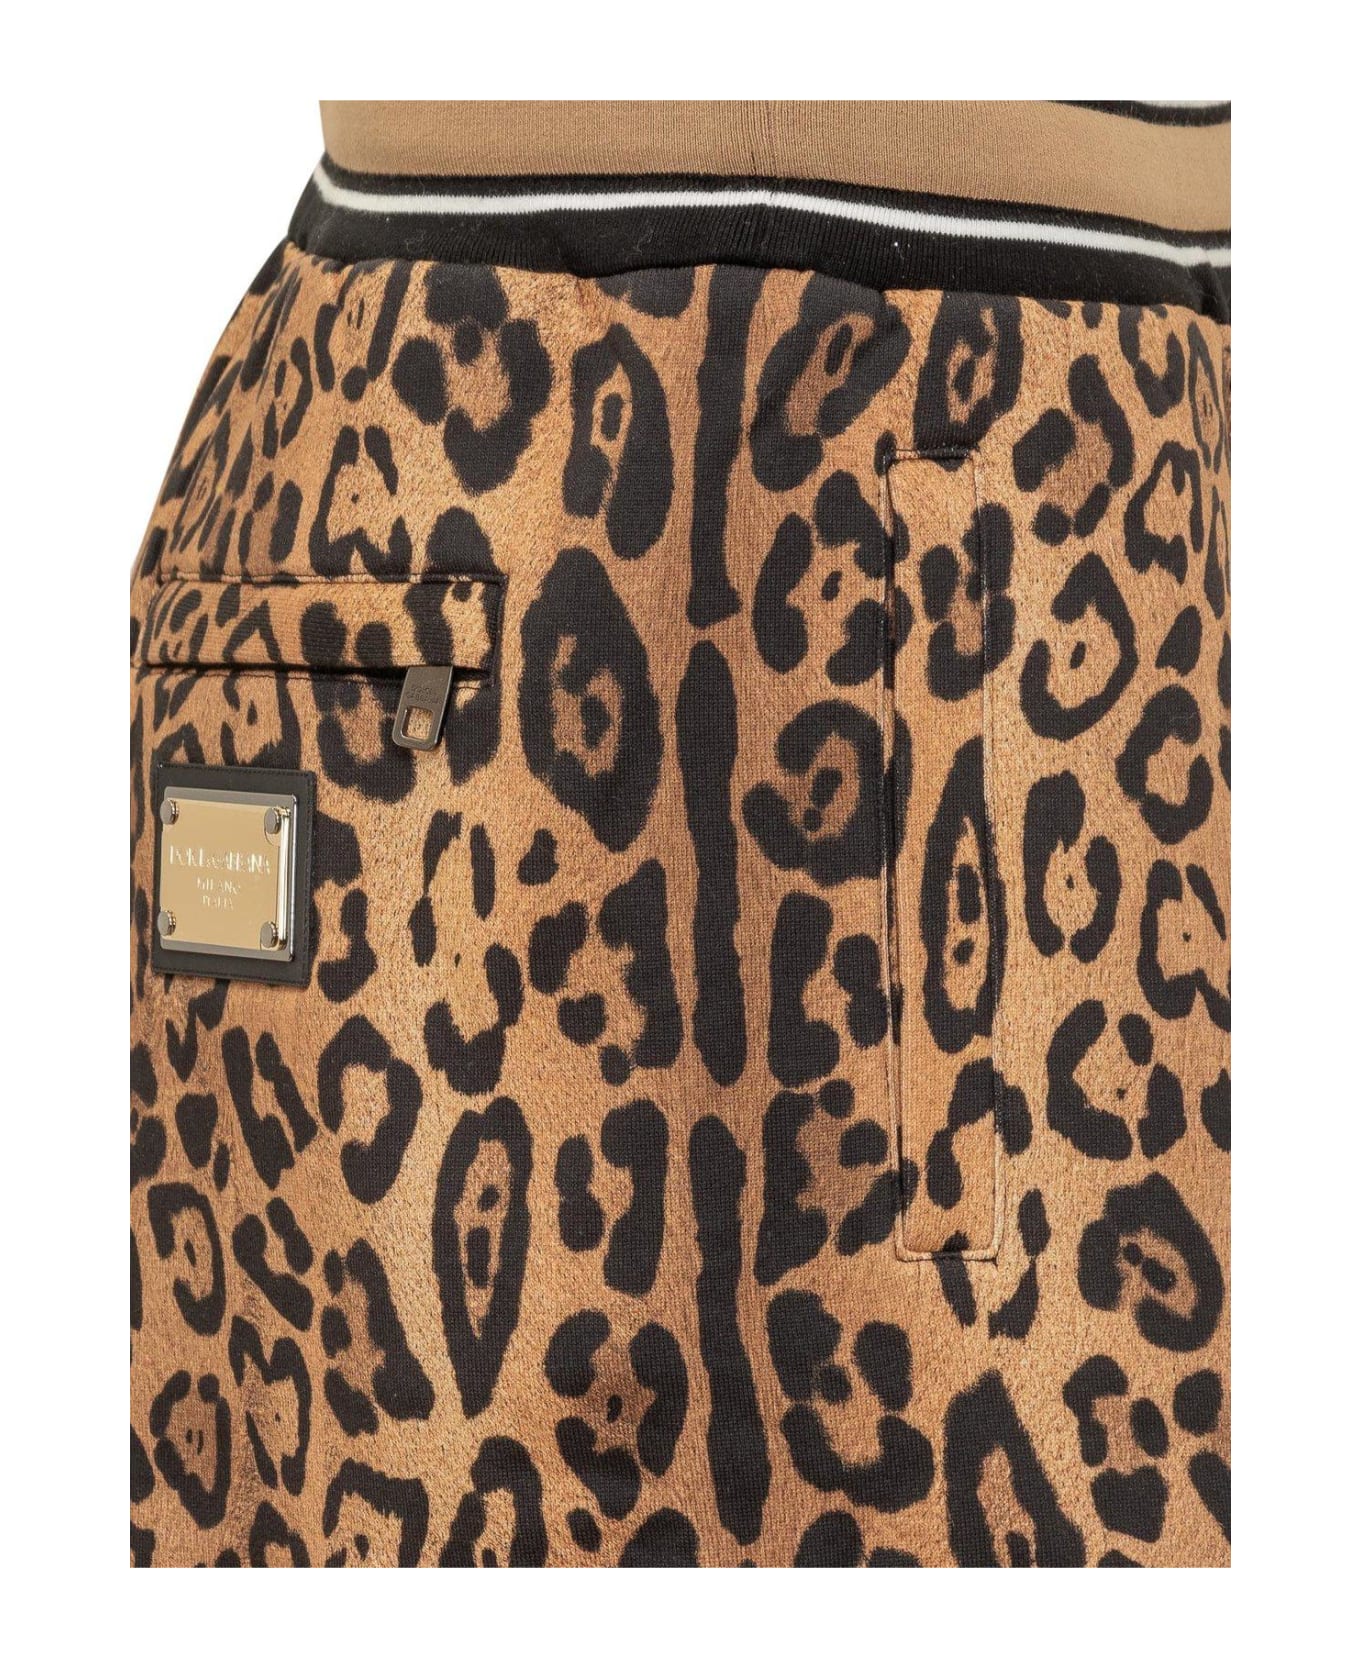 Dolce & Gabbana Cheetah-printed Drawstring Track Shorts - BROWN/BLACK